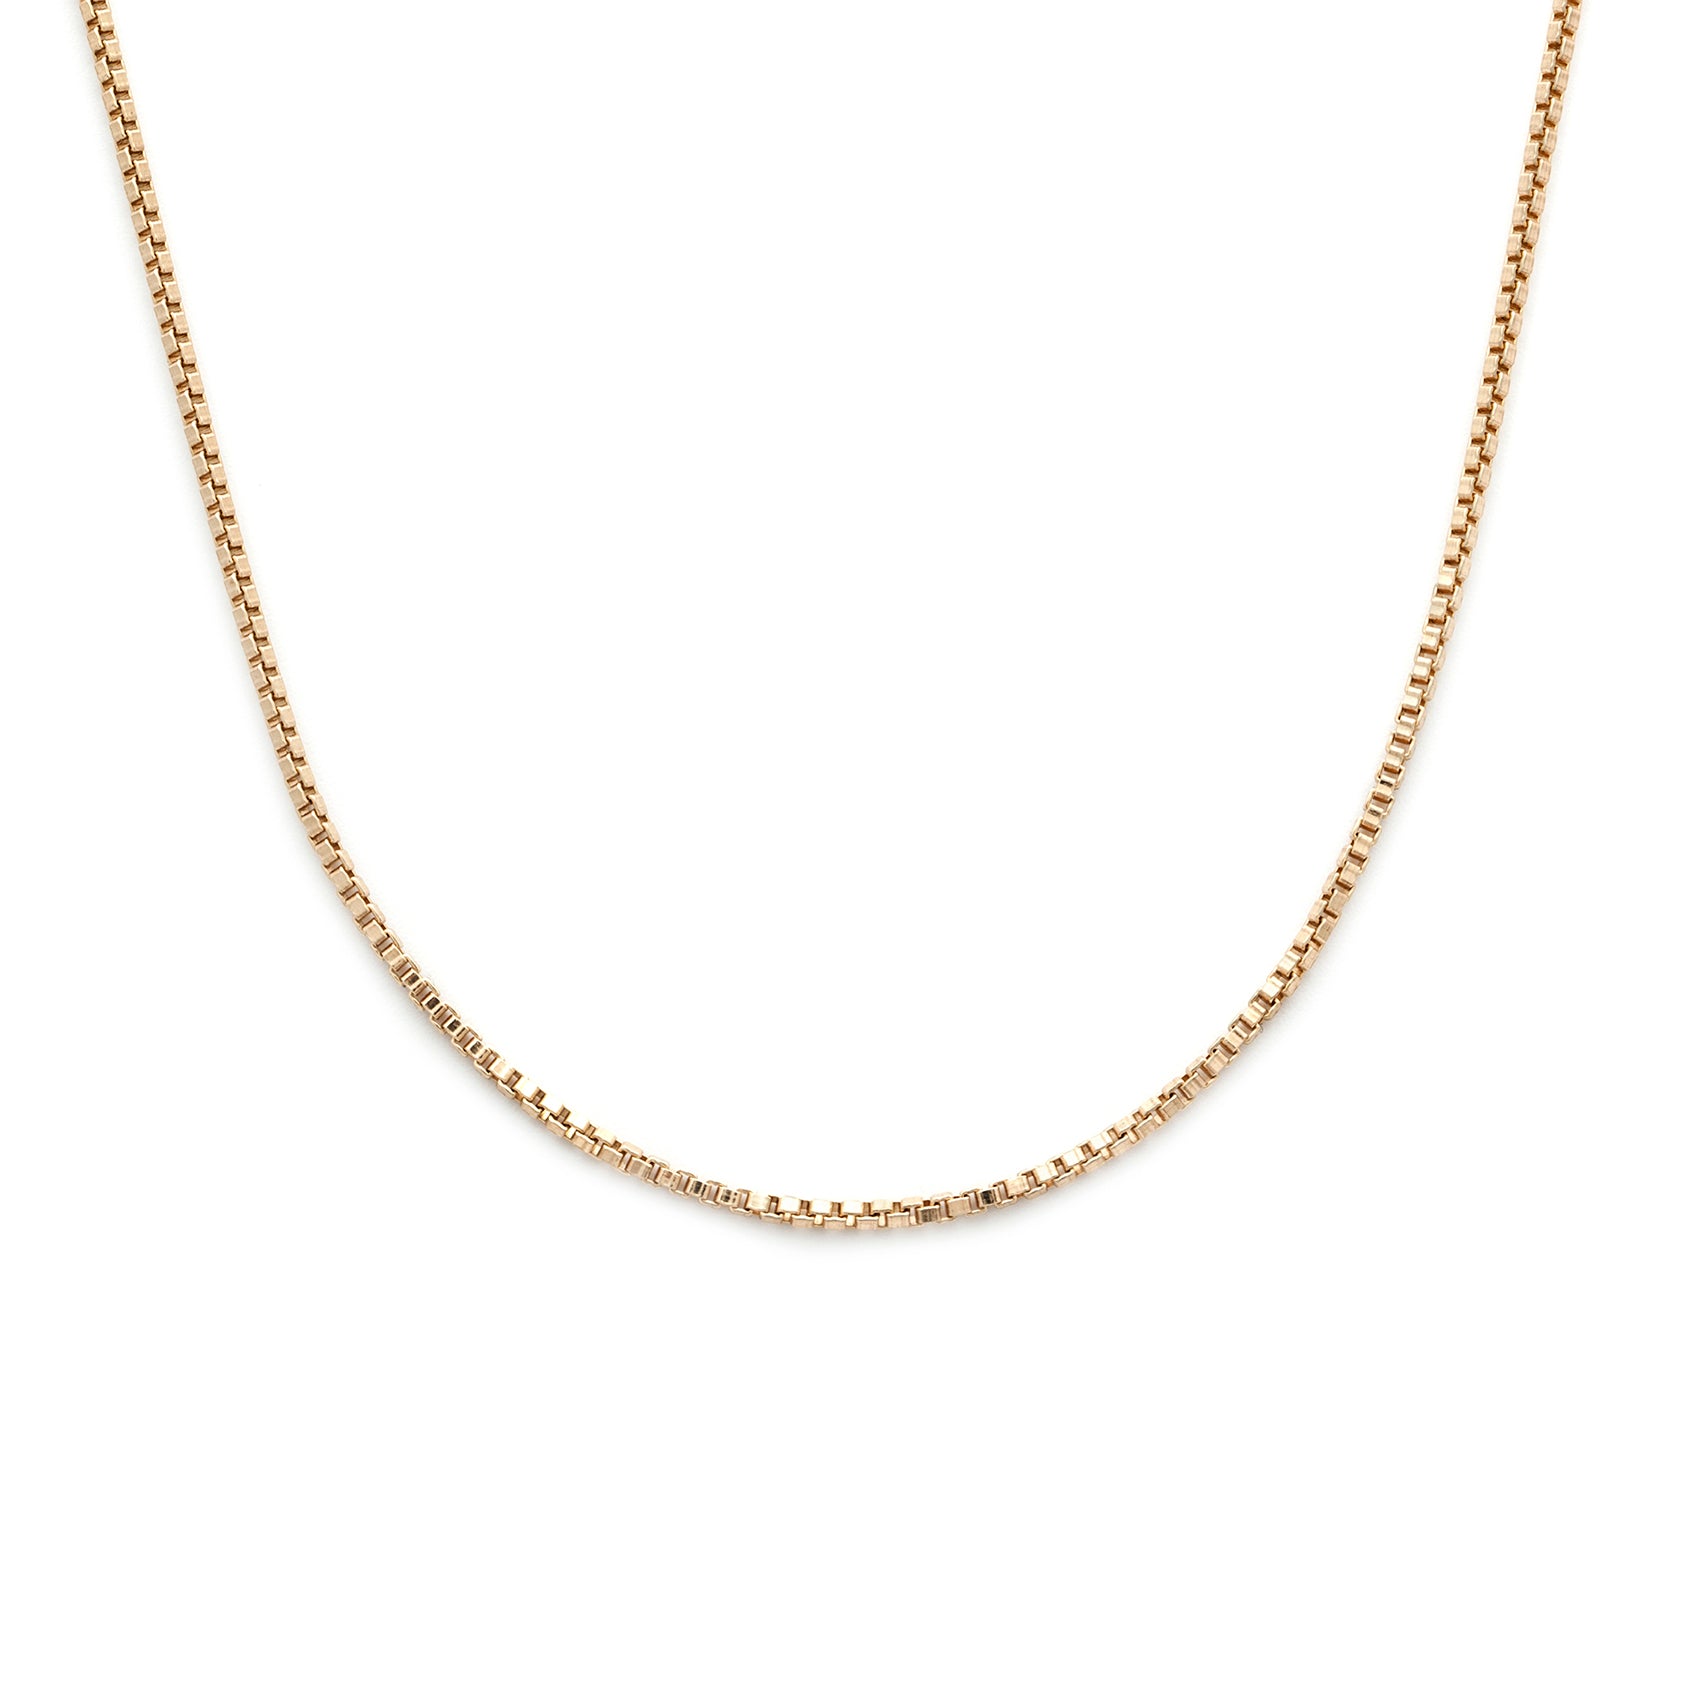 Buy 18K gold chains for women online | Ladies Gold Chain - Starkle